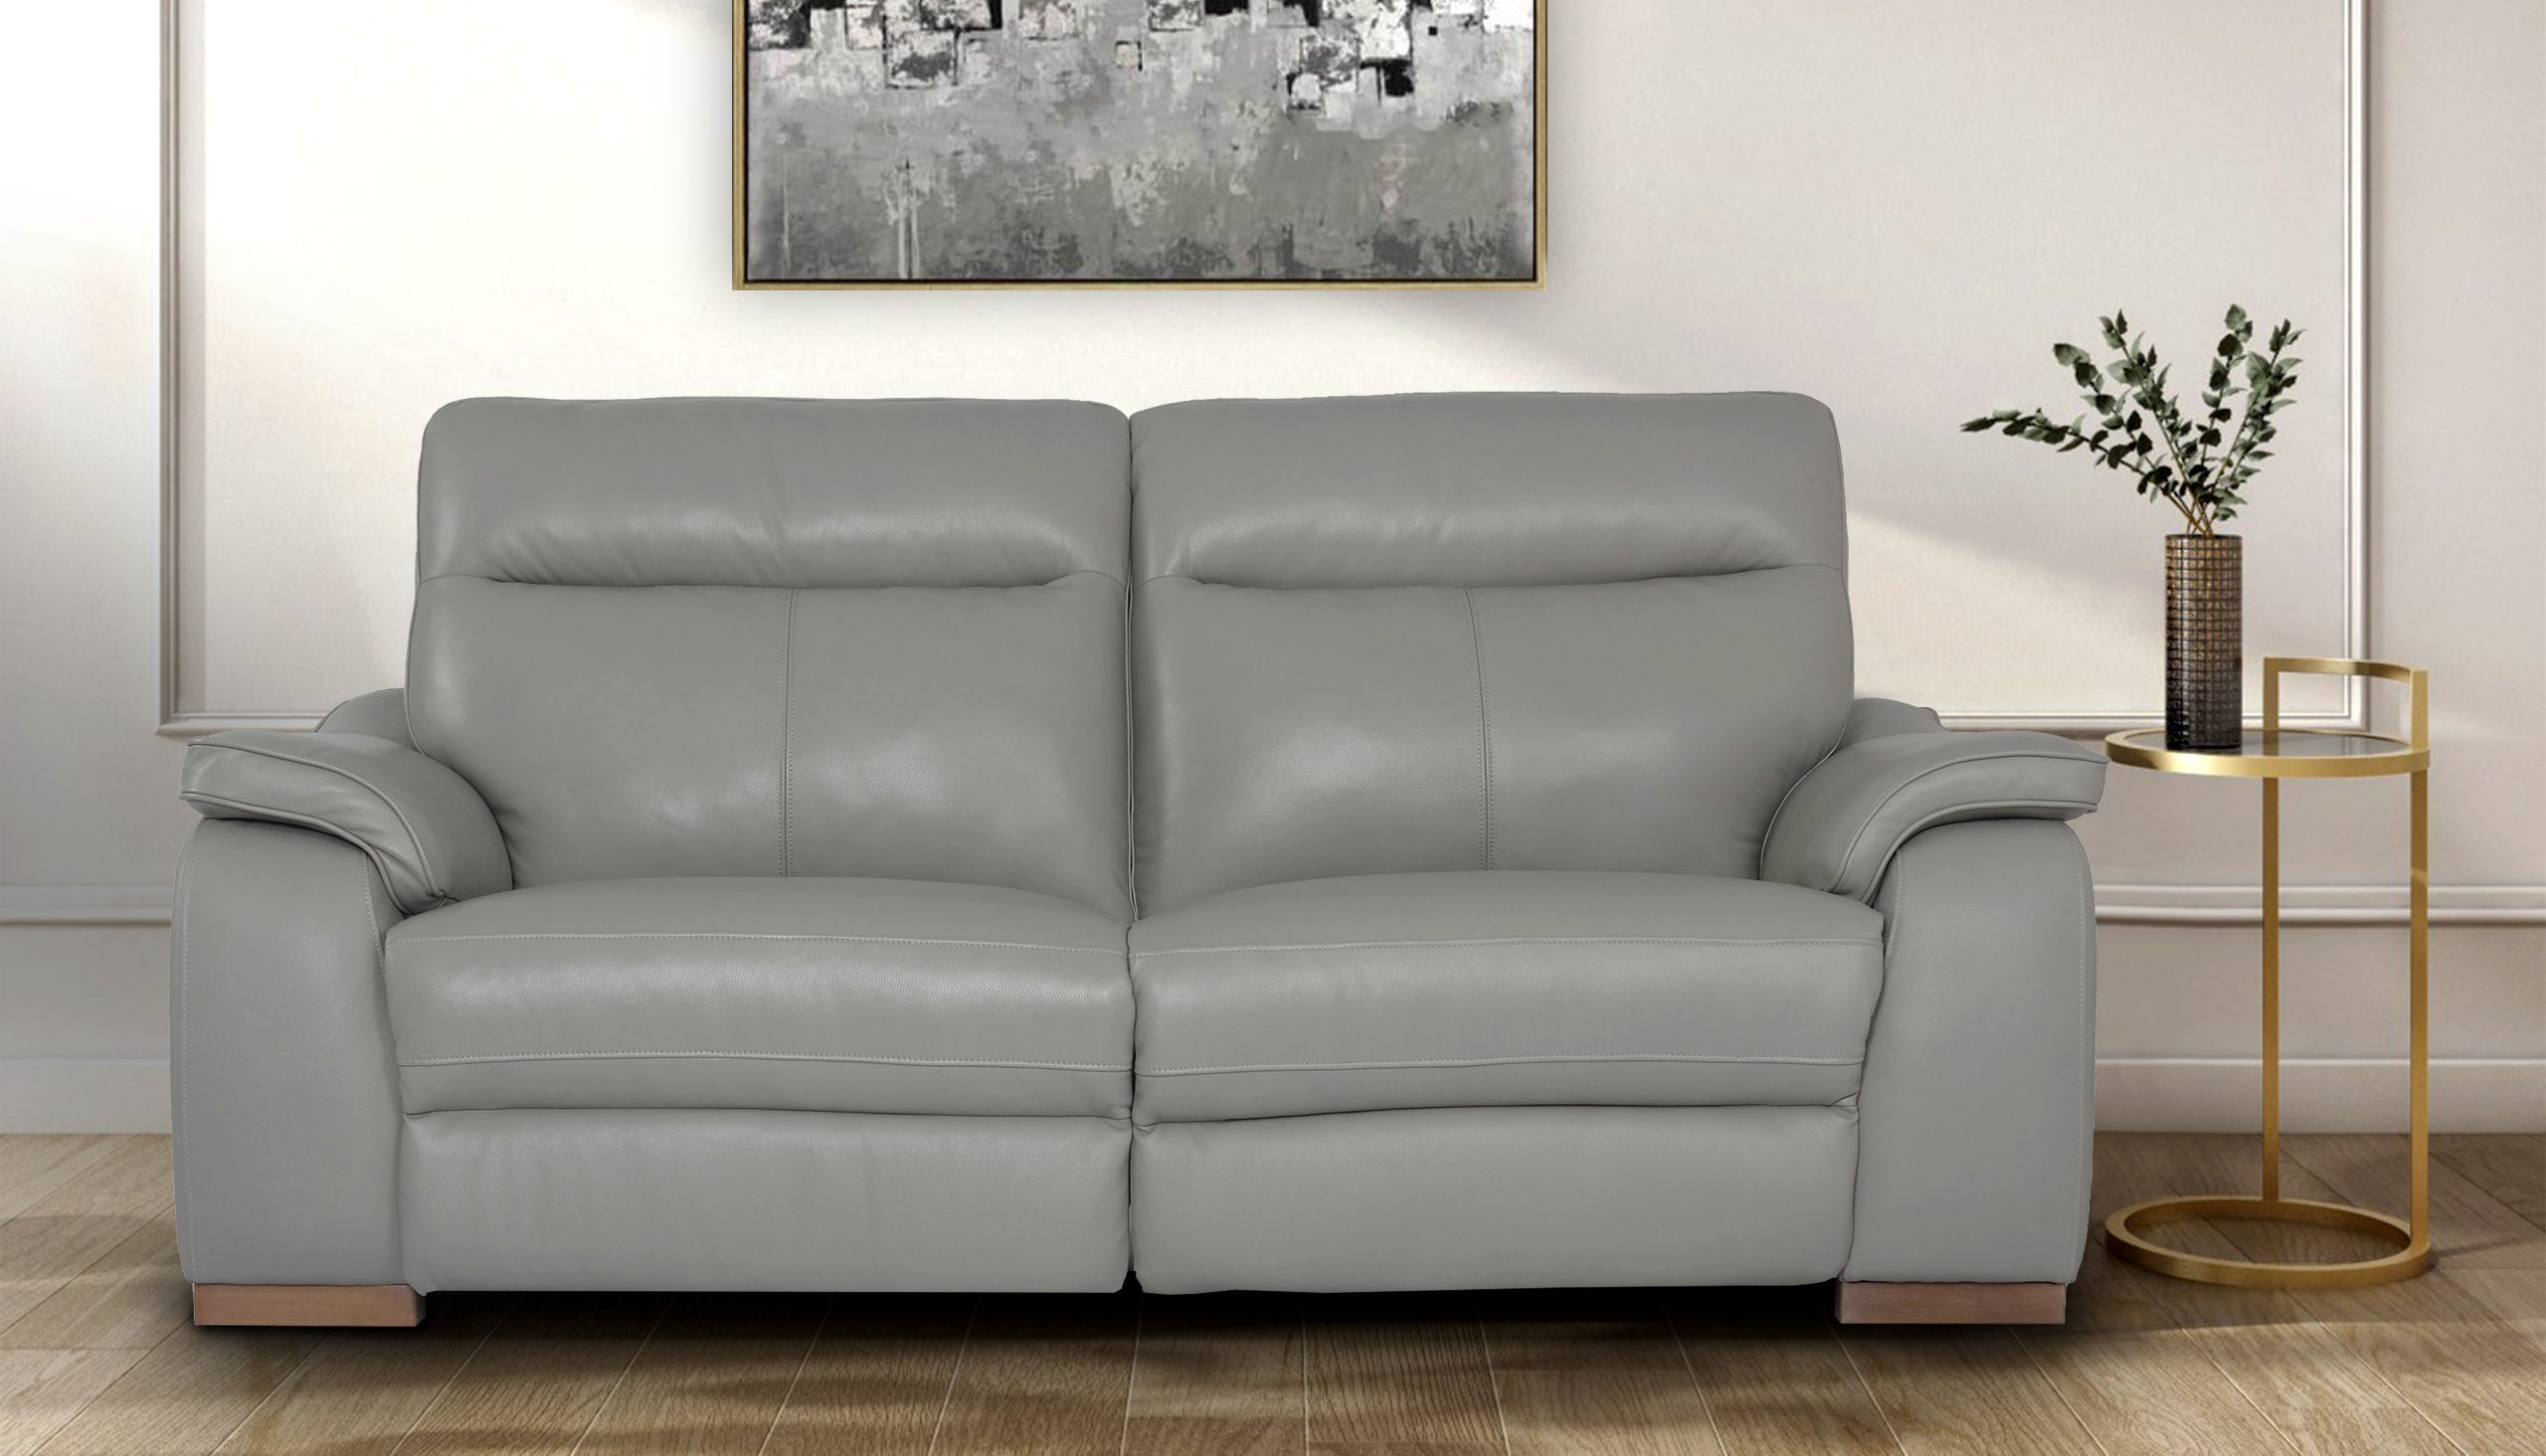 Sophia 3 Seater Manual Recliner Sofa in Leather